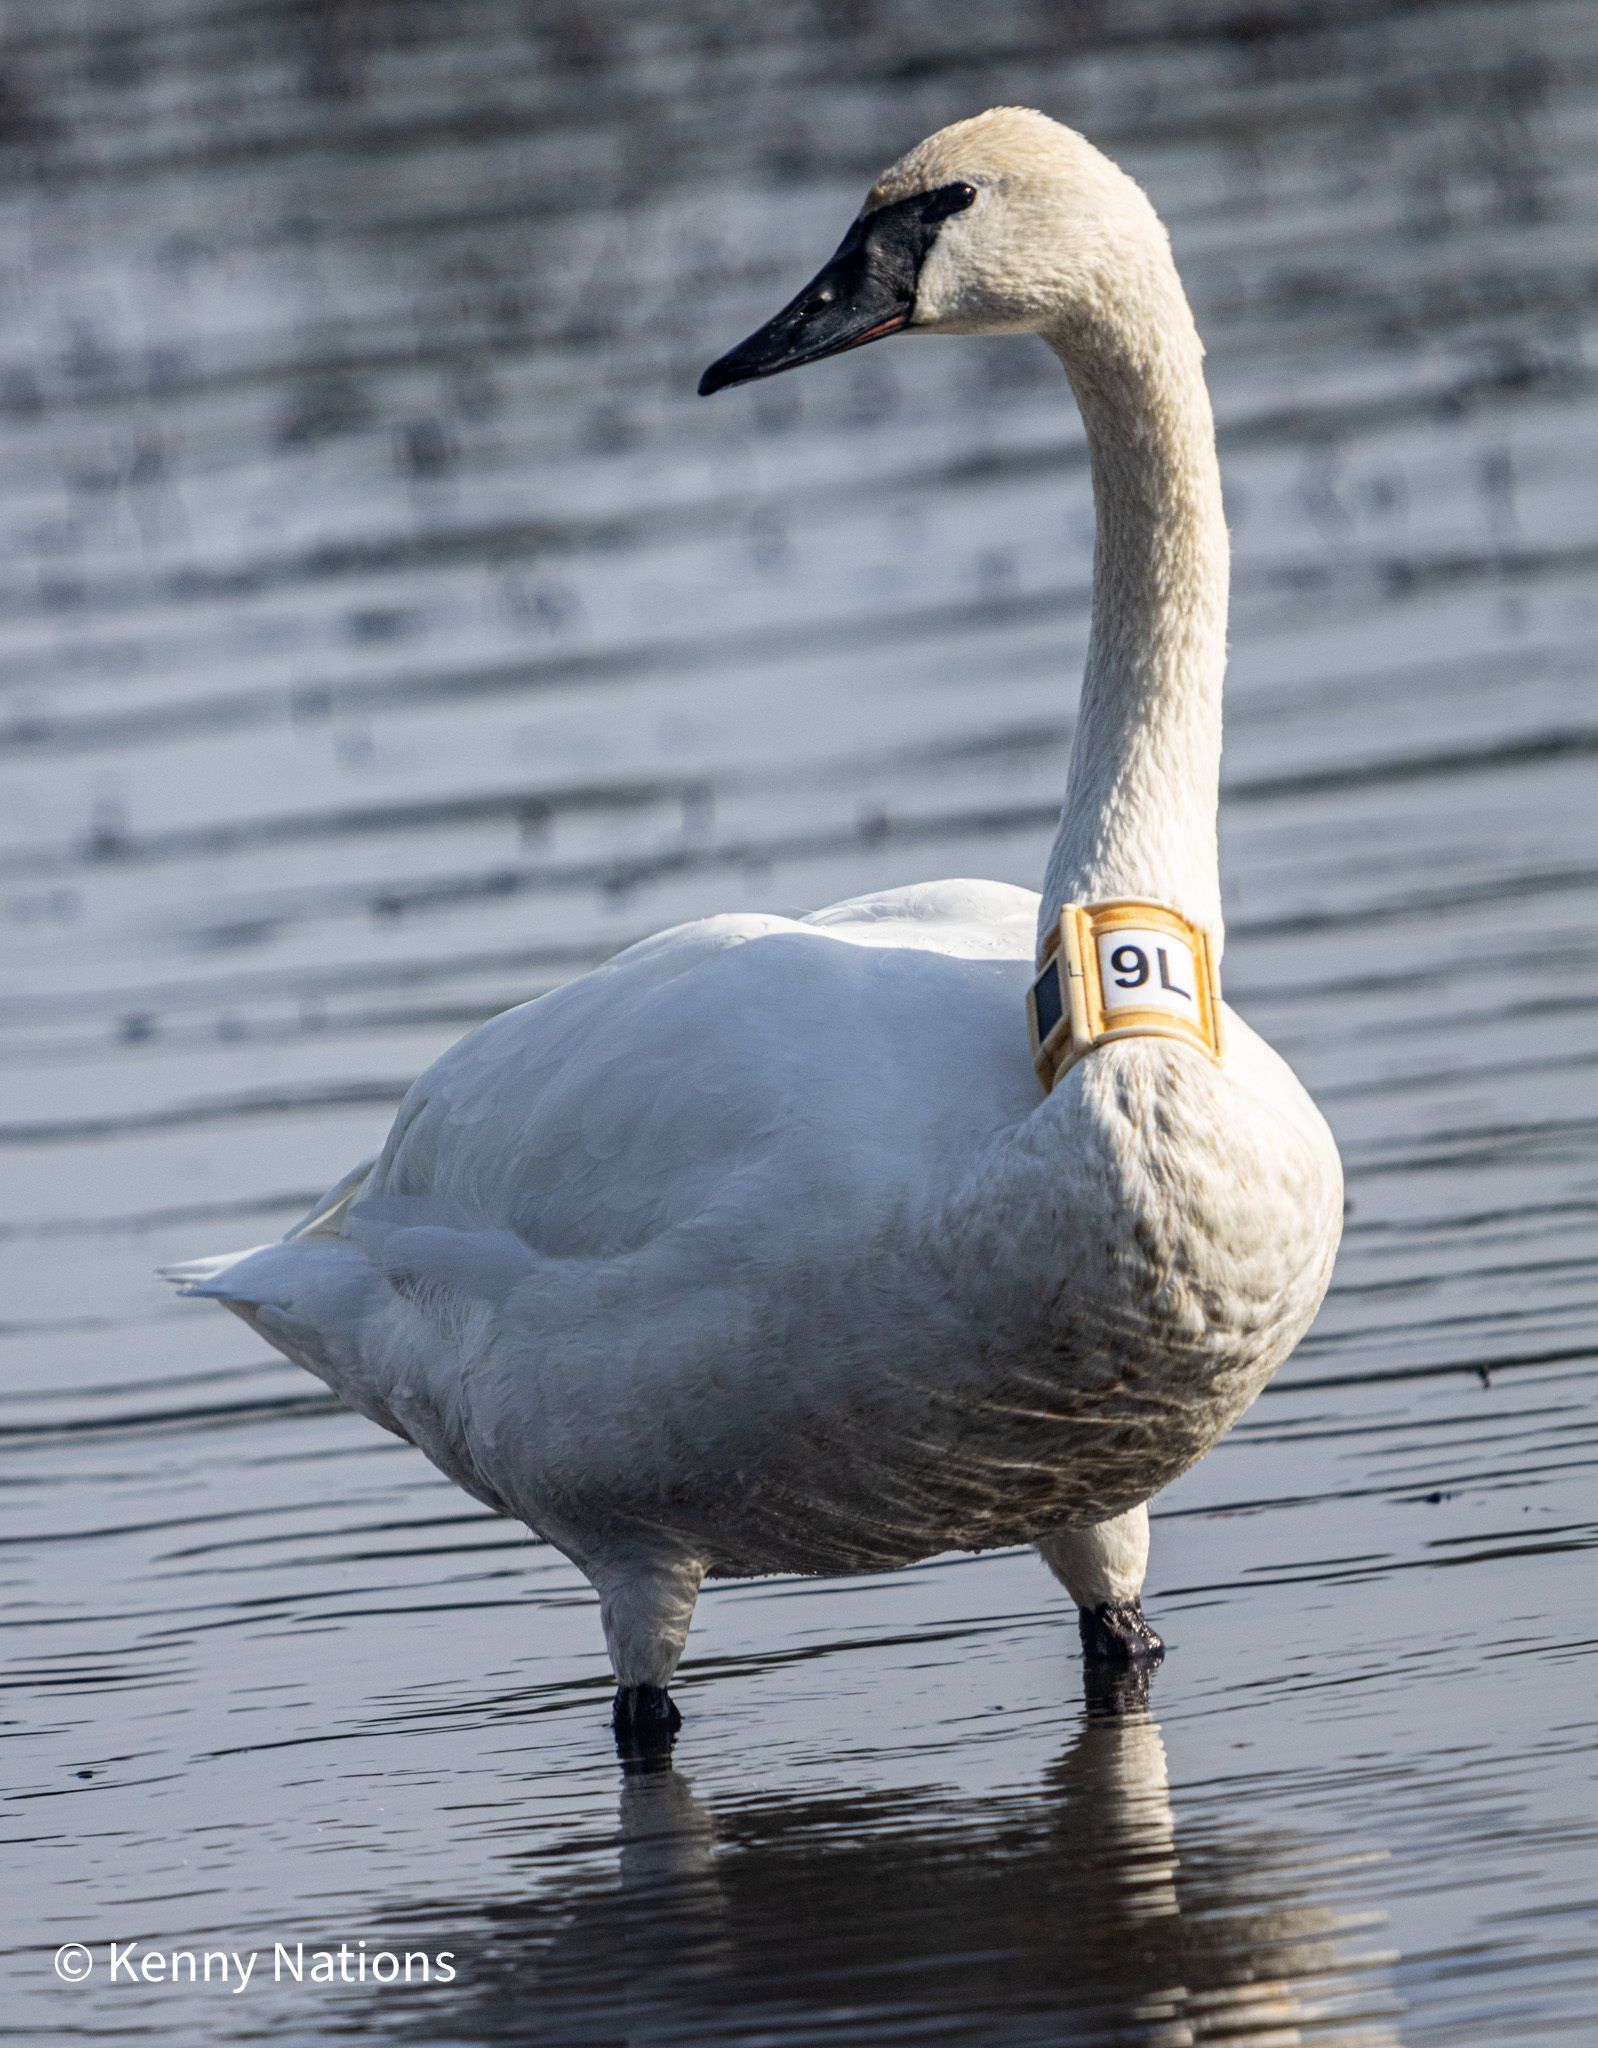 Female swan 9L returns to Heber Springs Arkansas for her third year